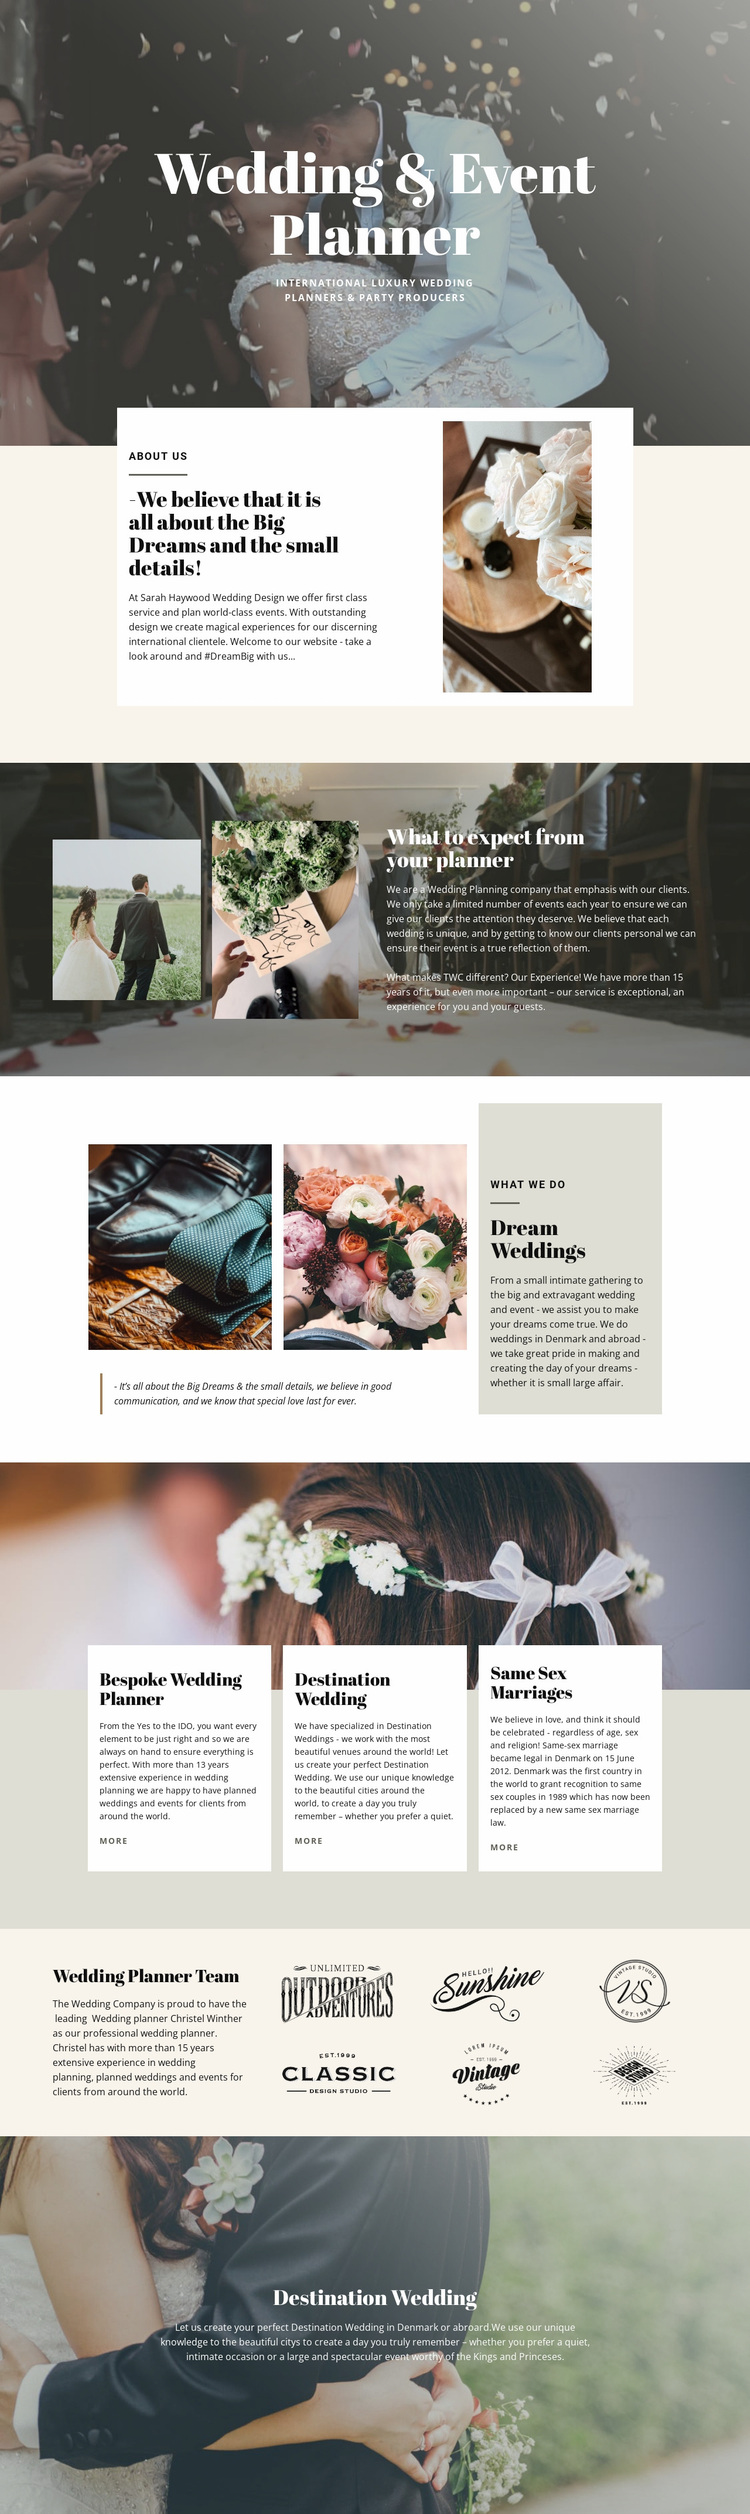 Biggest dream wedding Website Design